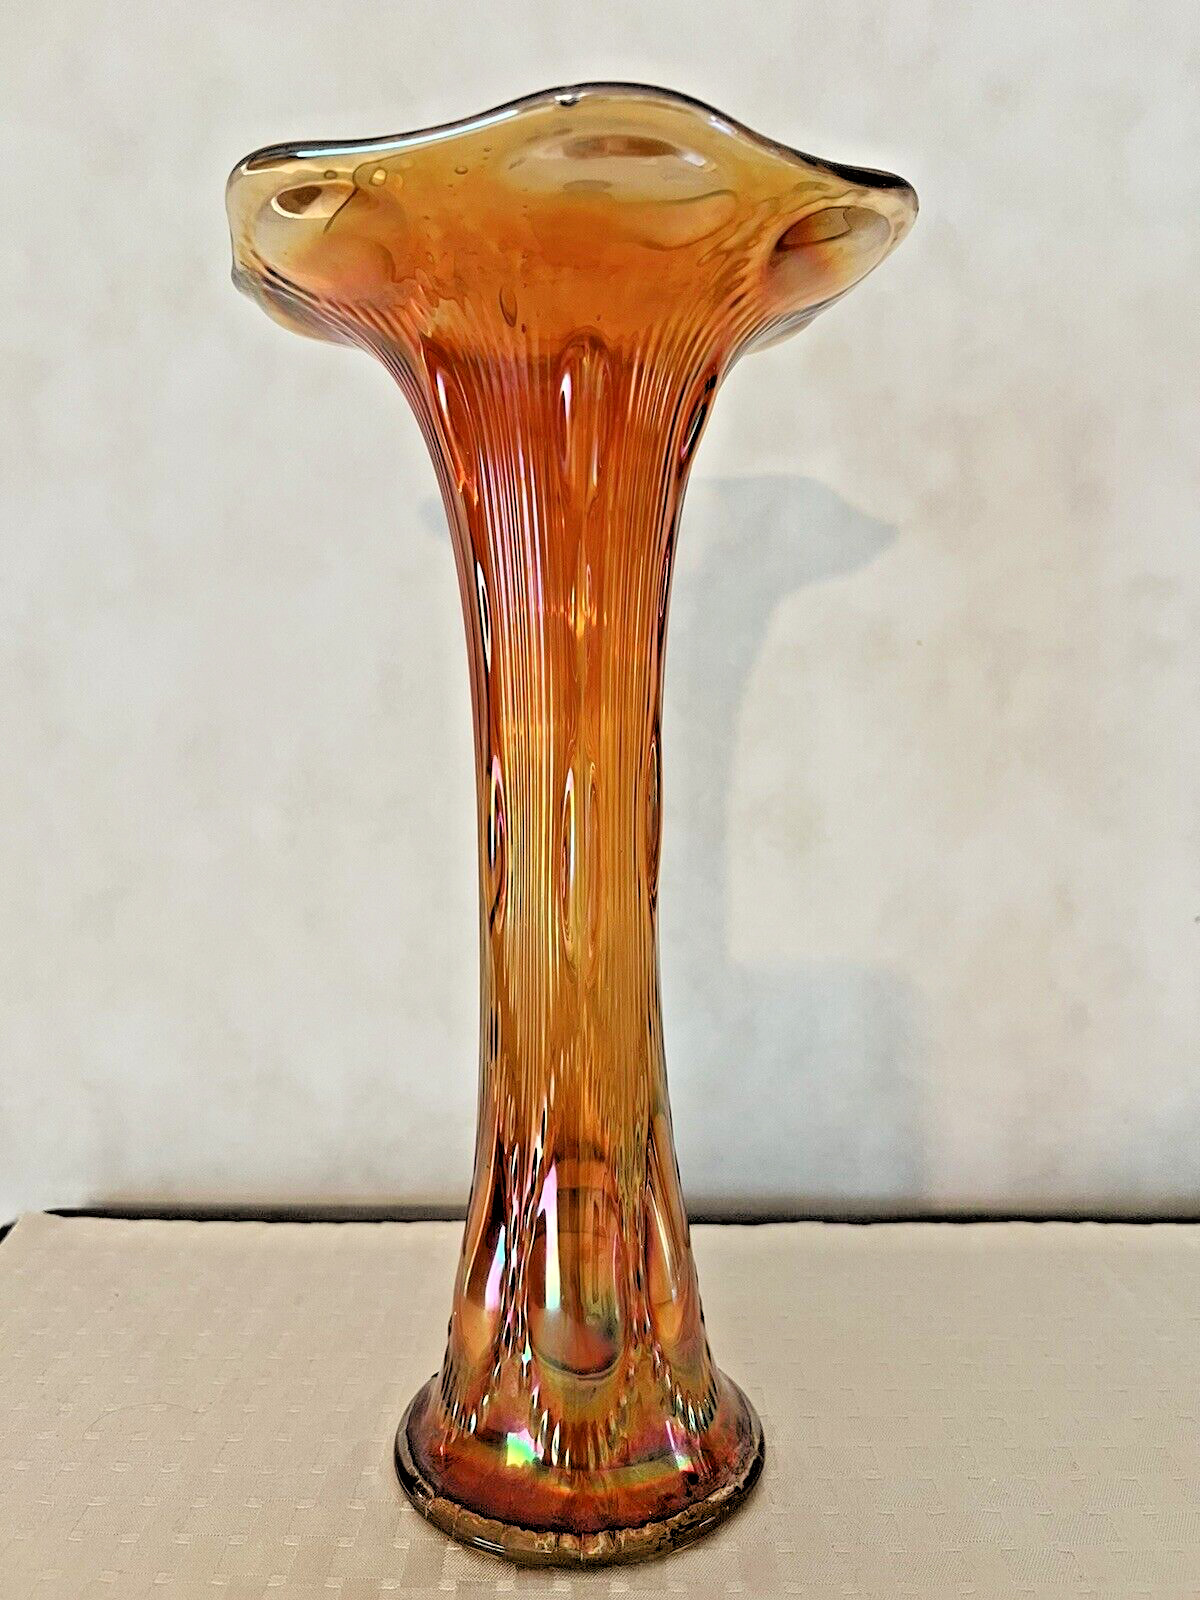 Atq. Imperial Glass Co. marigold carnival glass vase BEADED BULL'S EYE c.1904